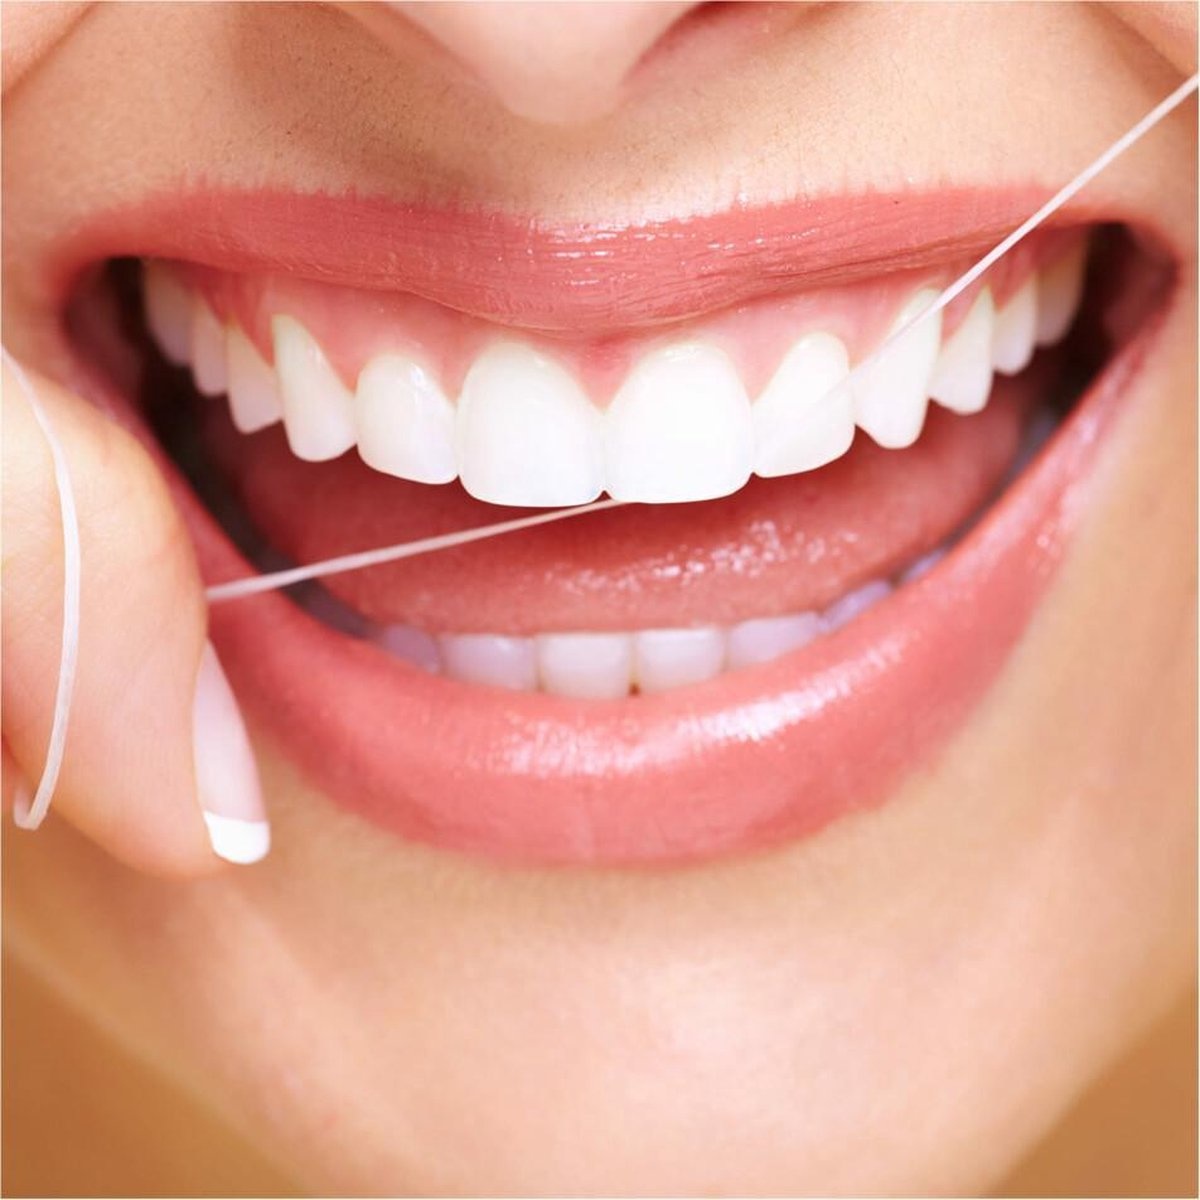 Oral-B Pro-Expert Premium - 40m - Zahnseide